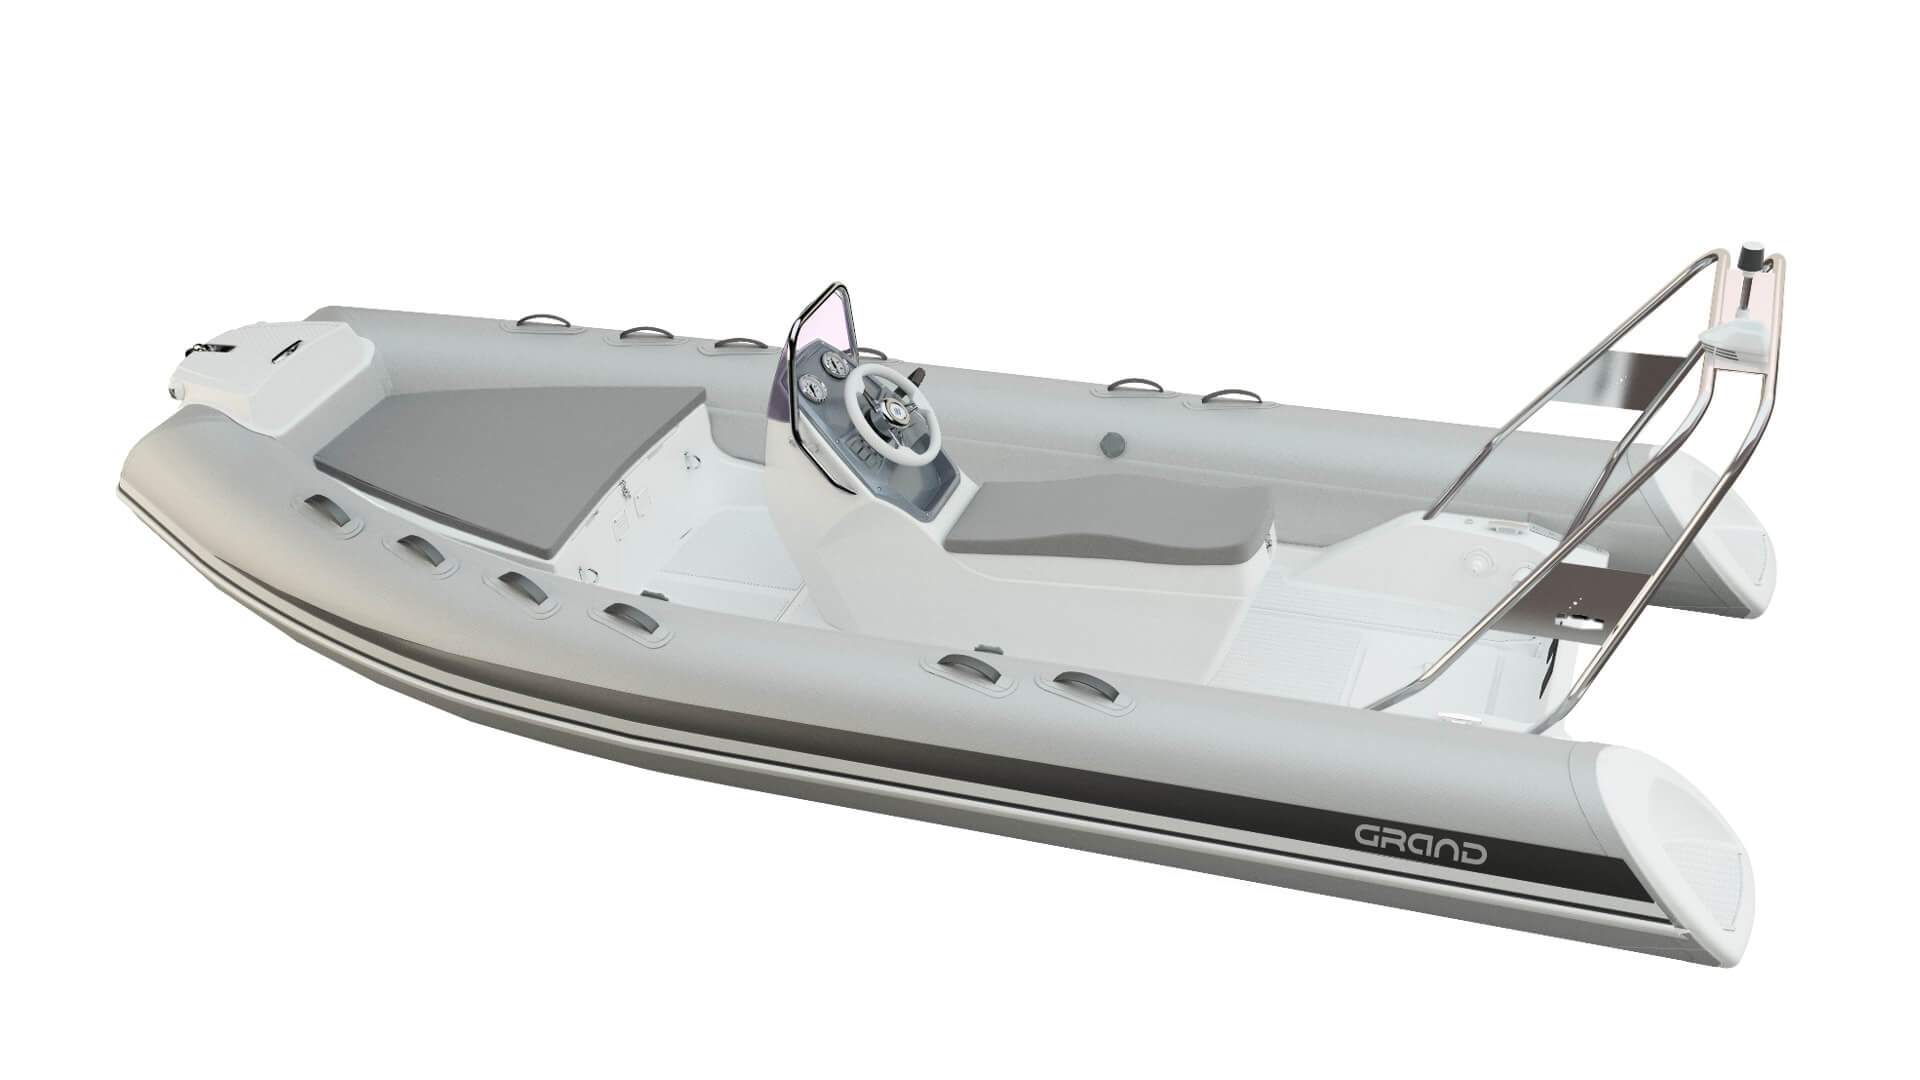 Надувная лодка с жестким дном GRAND Silver Line S520S, Надувная лодка GRAND Silver Line S520SF, GRAND Silver Line S520S, GRAND Silver Line S520SF, GRAND S520S, GRAND S520SF, GRAND S520, Надувная лодка GRAND, Надувная лодка ГРАНД, Надувная лодка с жестким дном, RIB, Rigid Inflatable Boats